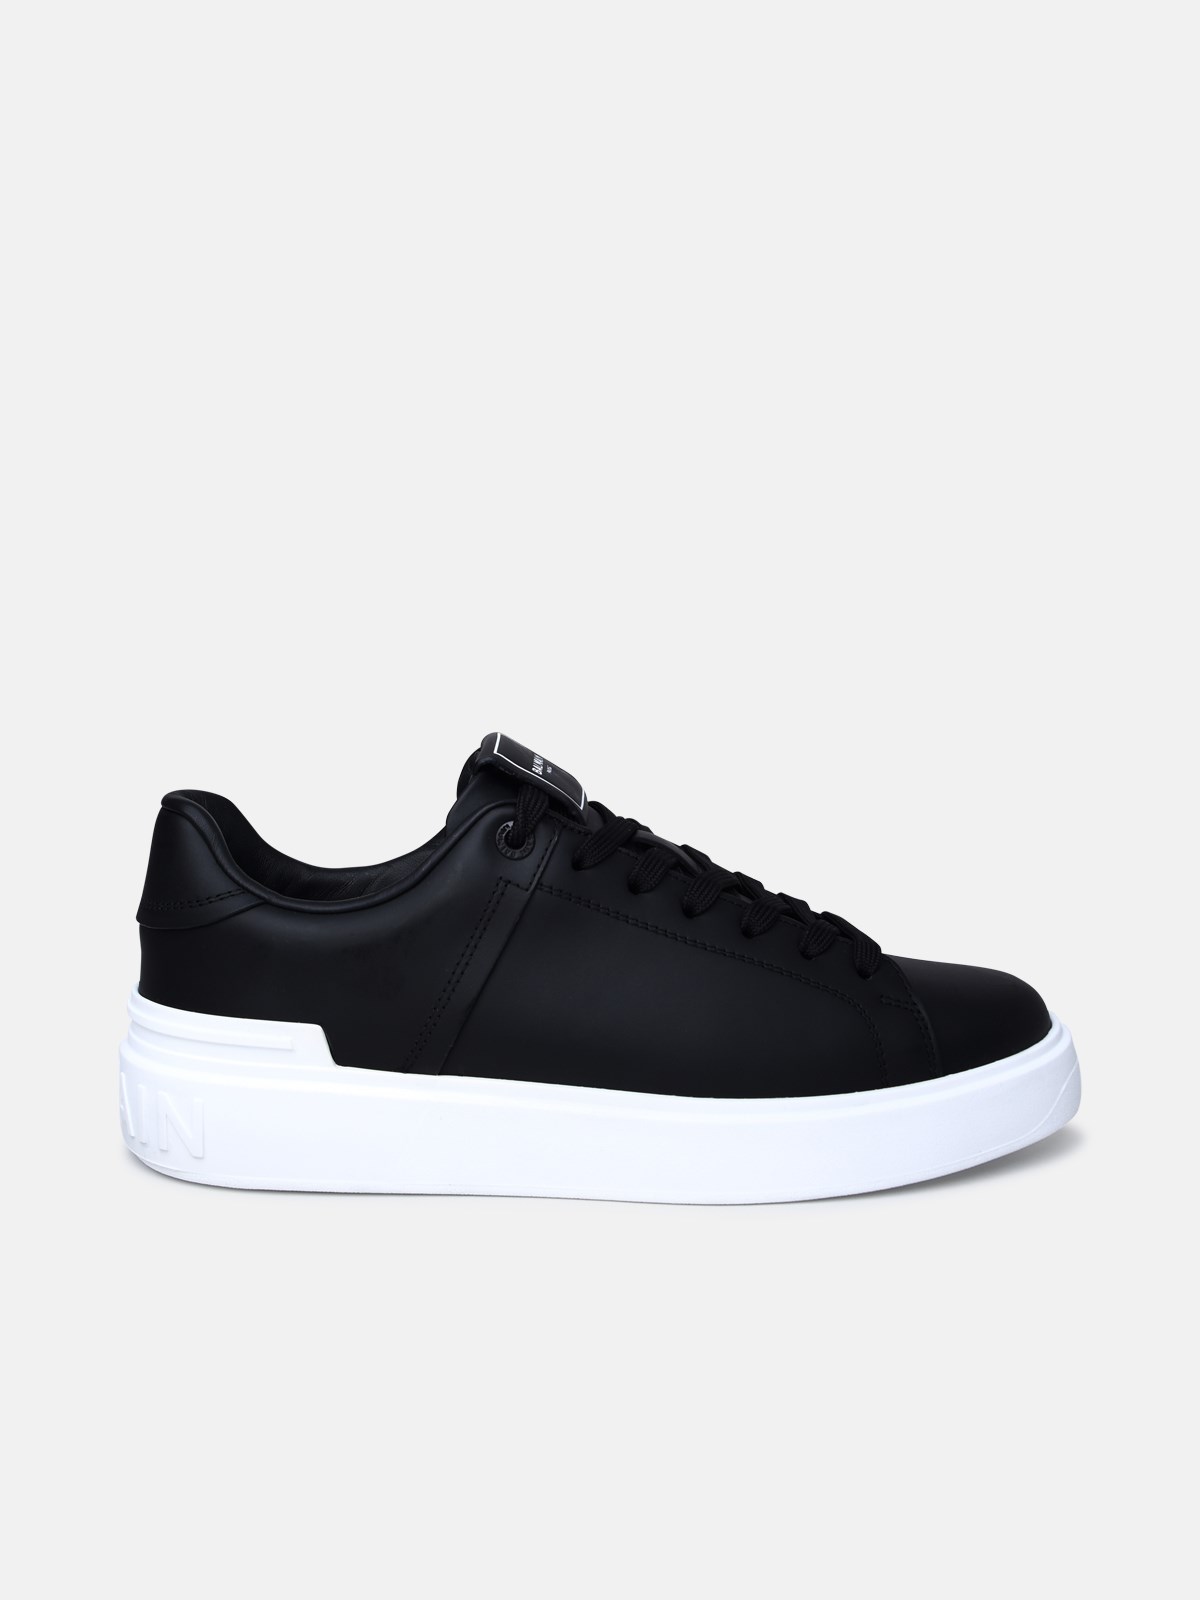 Balmain Black Leather Sneakers